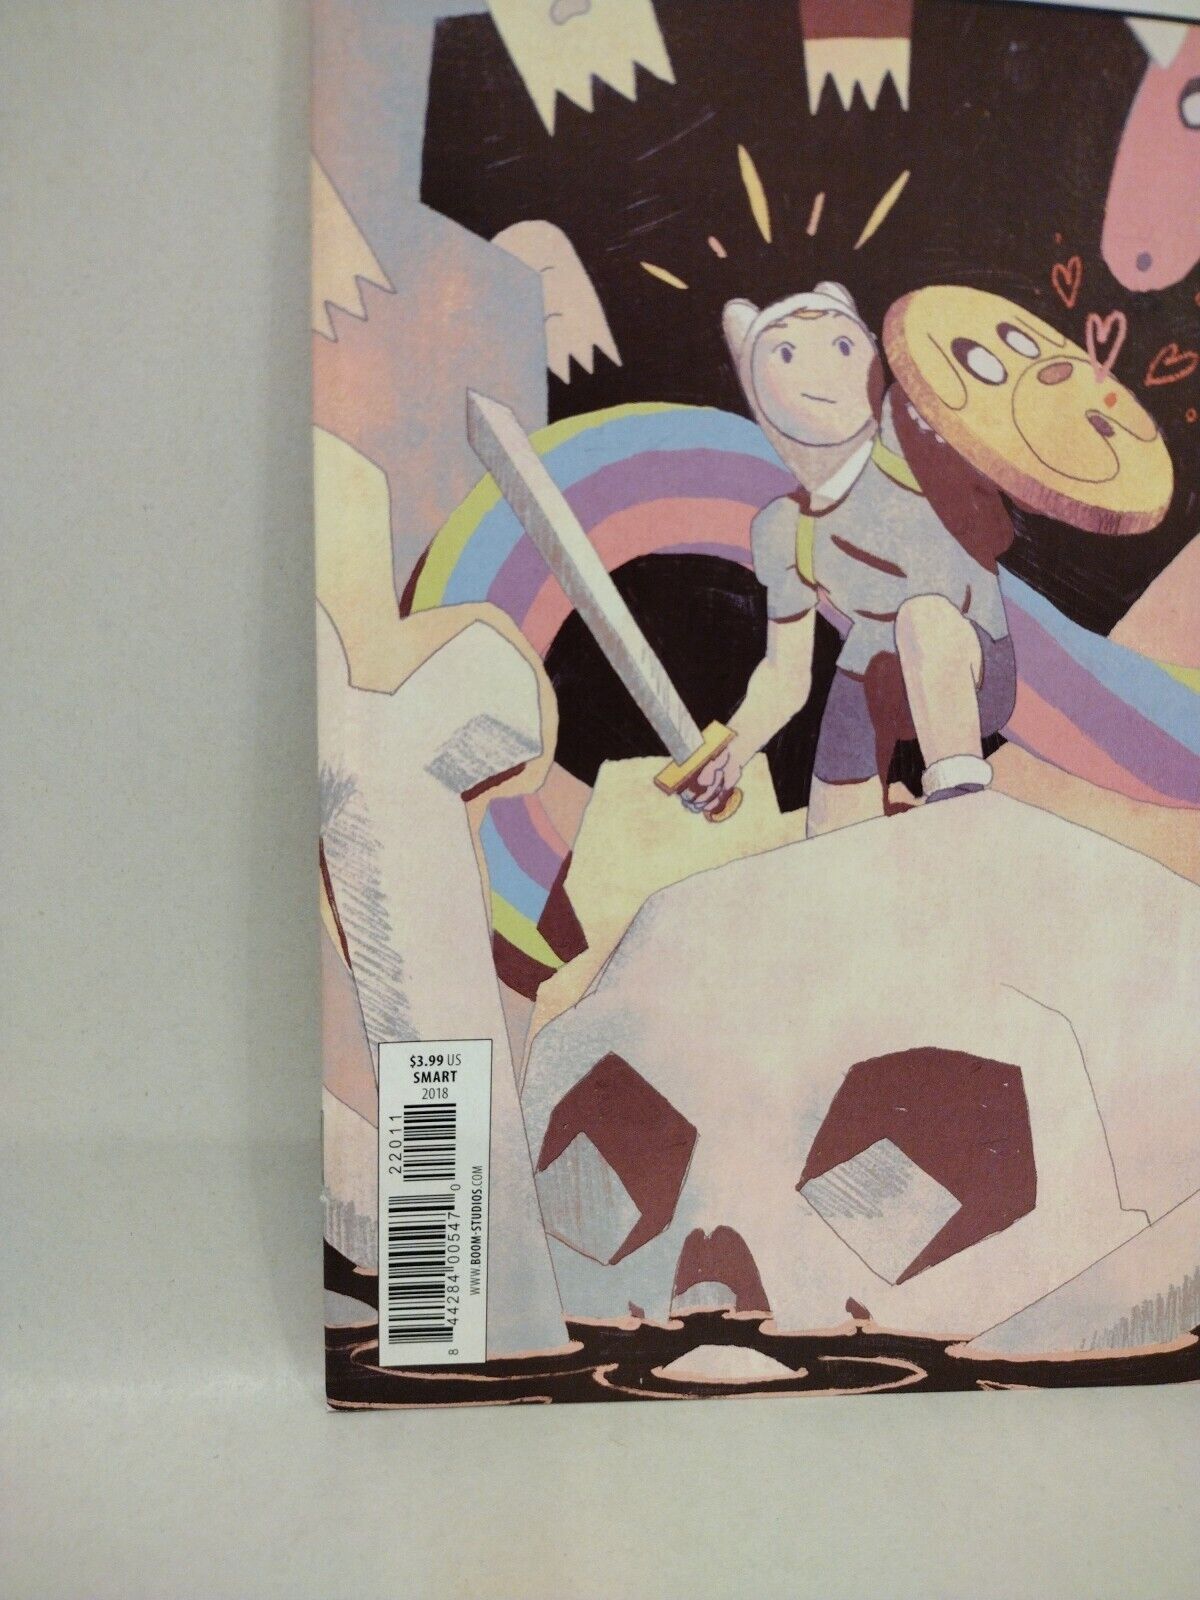 Adventure Time Comics #22 (2018) Boom Studios Kyle Smart Cover A NM